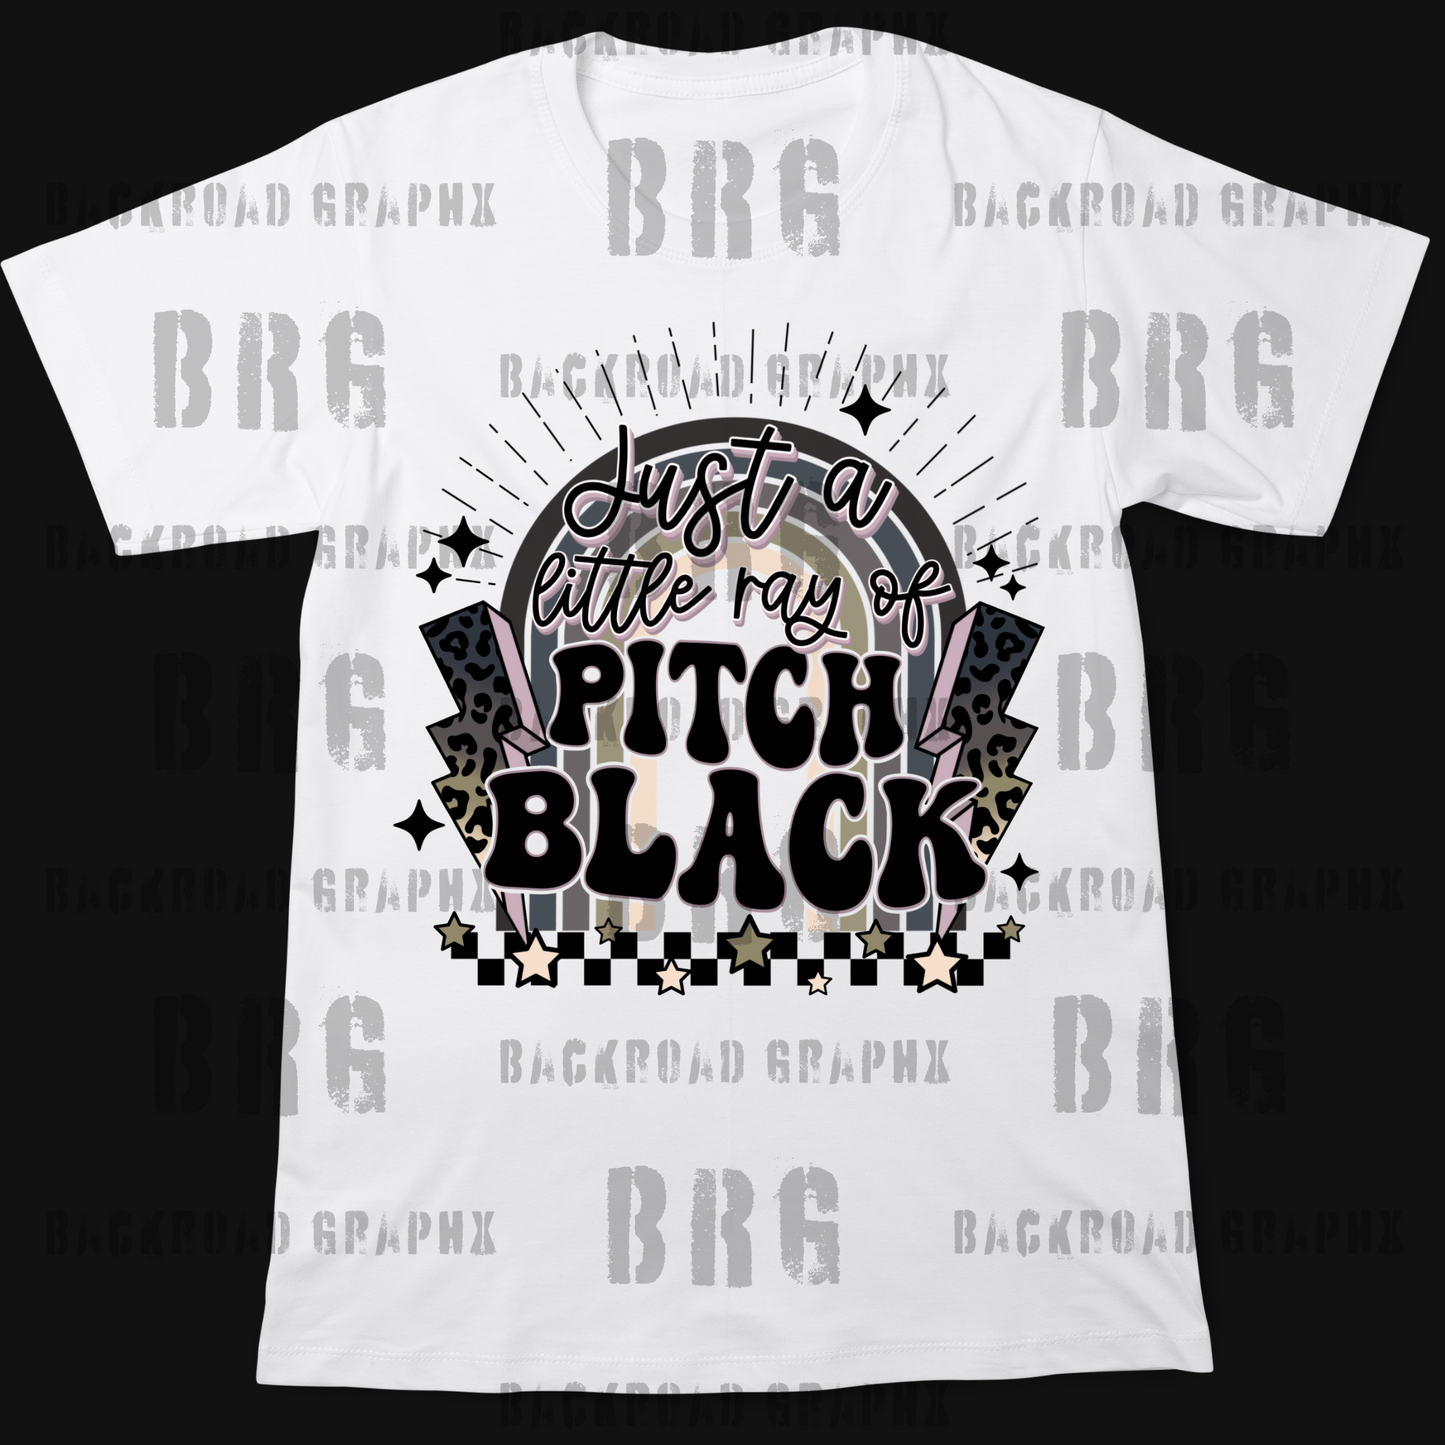 Pitch Black transfer